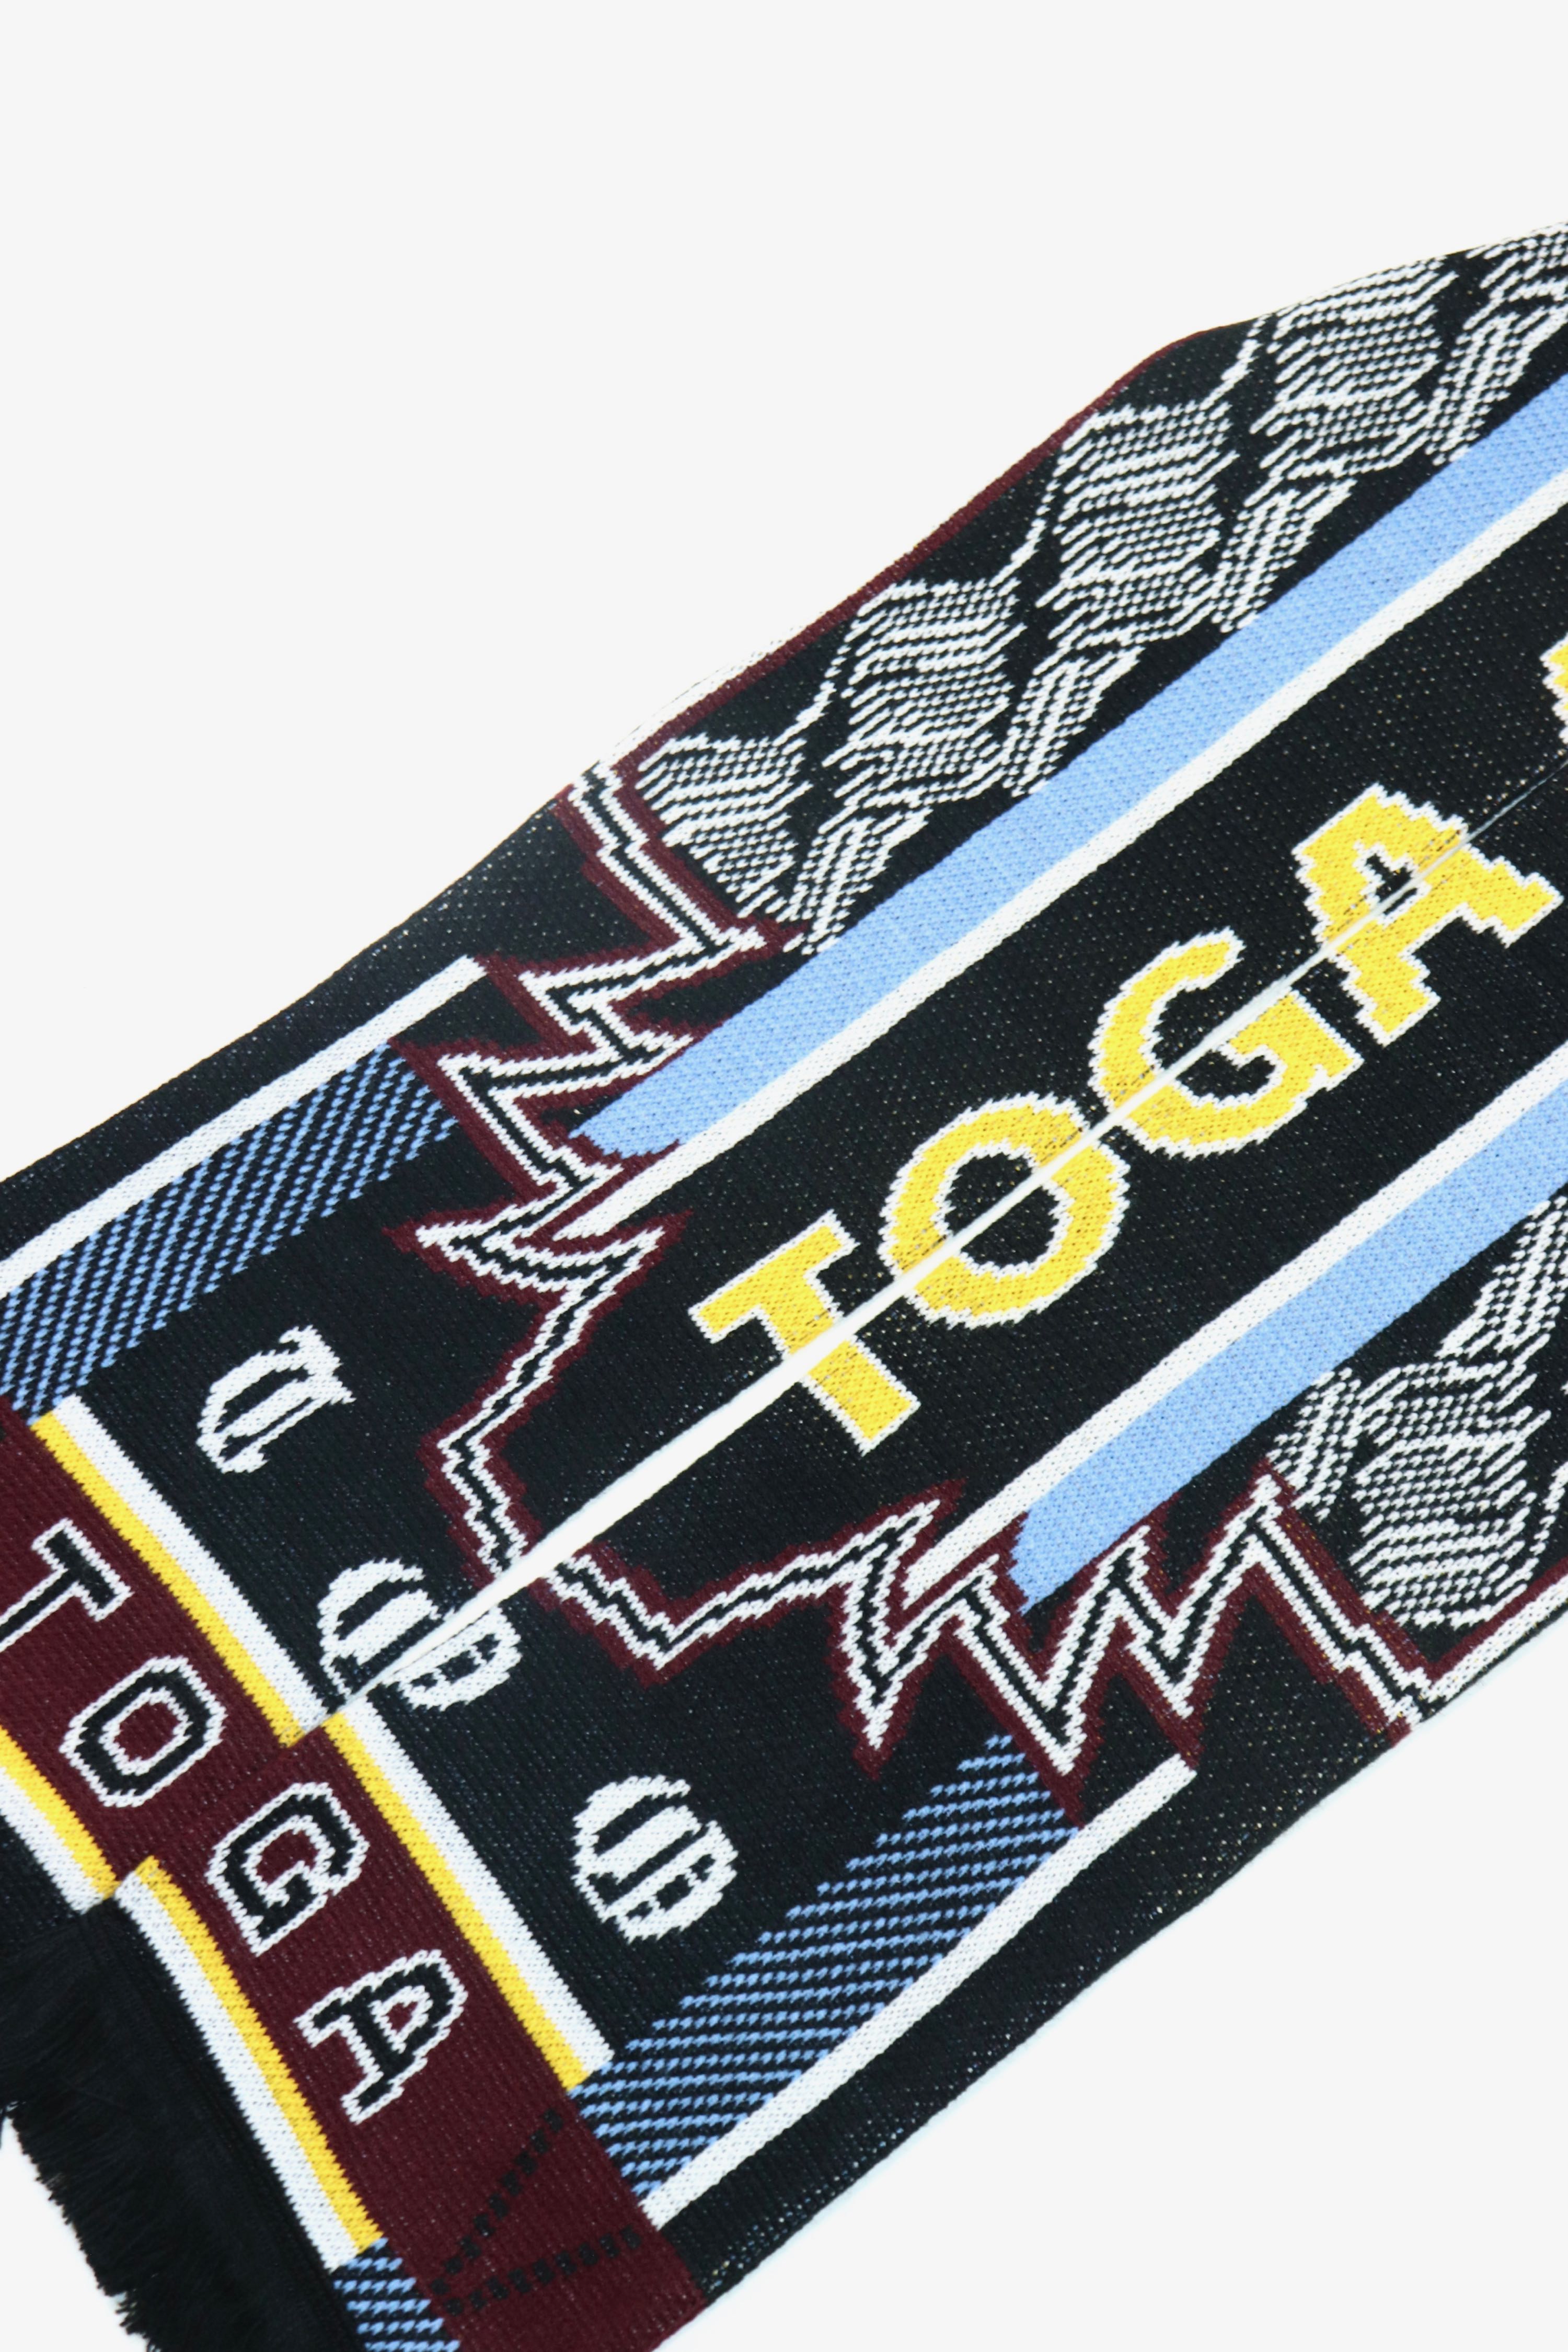 TOGA VIRILIS(トーガ ビリリース)のKnit scarfの通販｜PALETTE art aliveのオンラインショップ ...